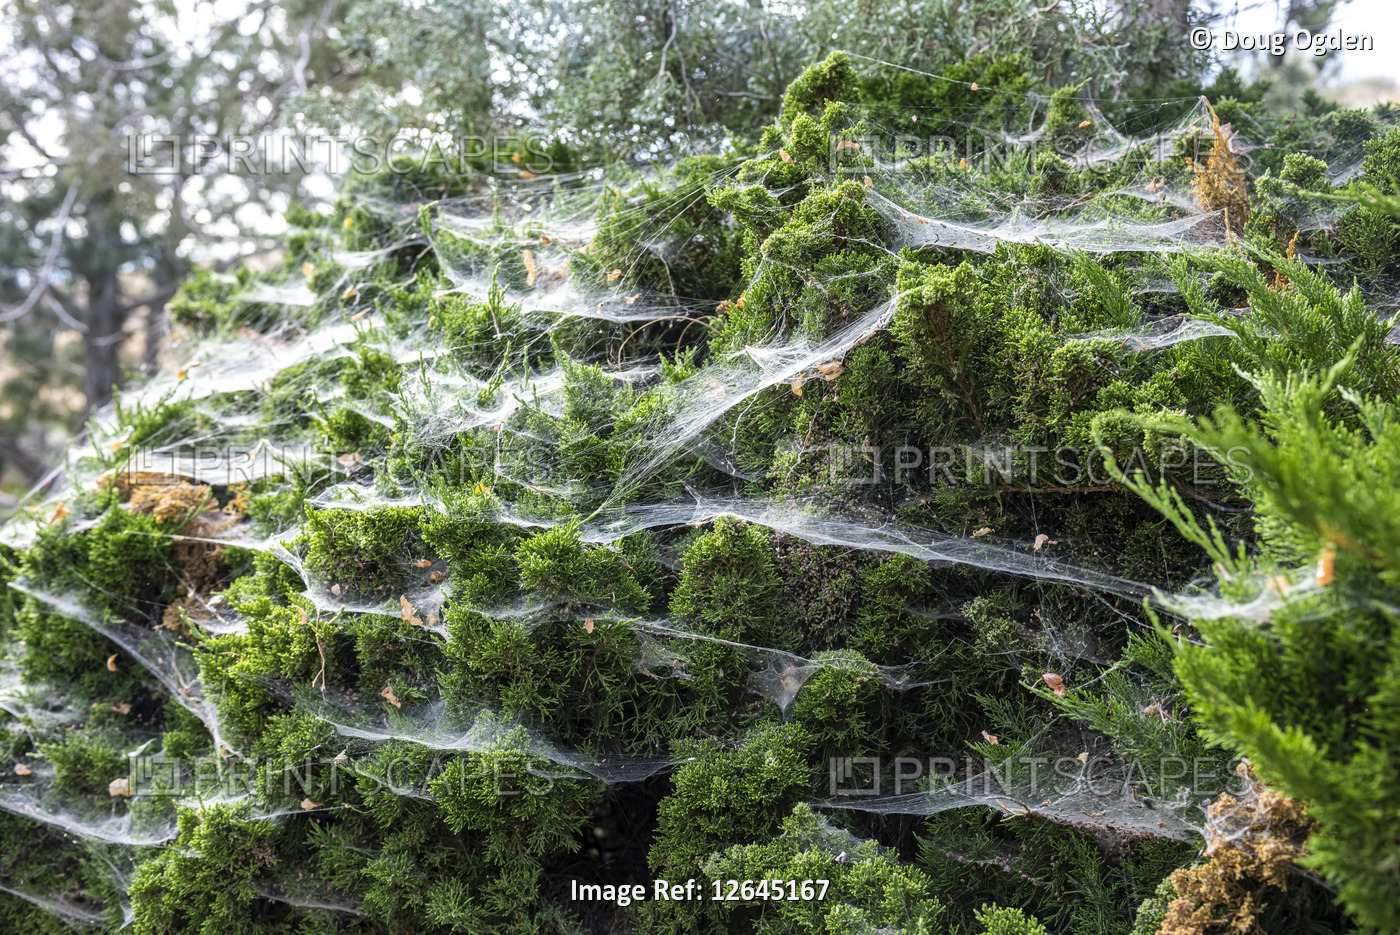 Spider webs covering an evergreen Juniper bush creating a spooky feeling; ...